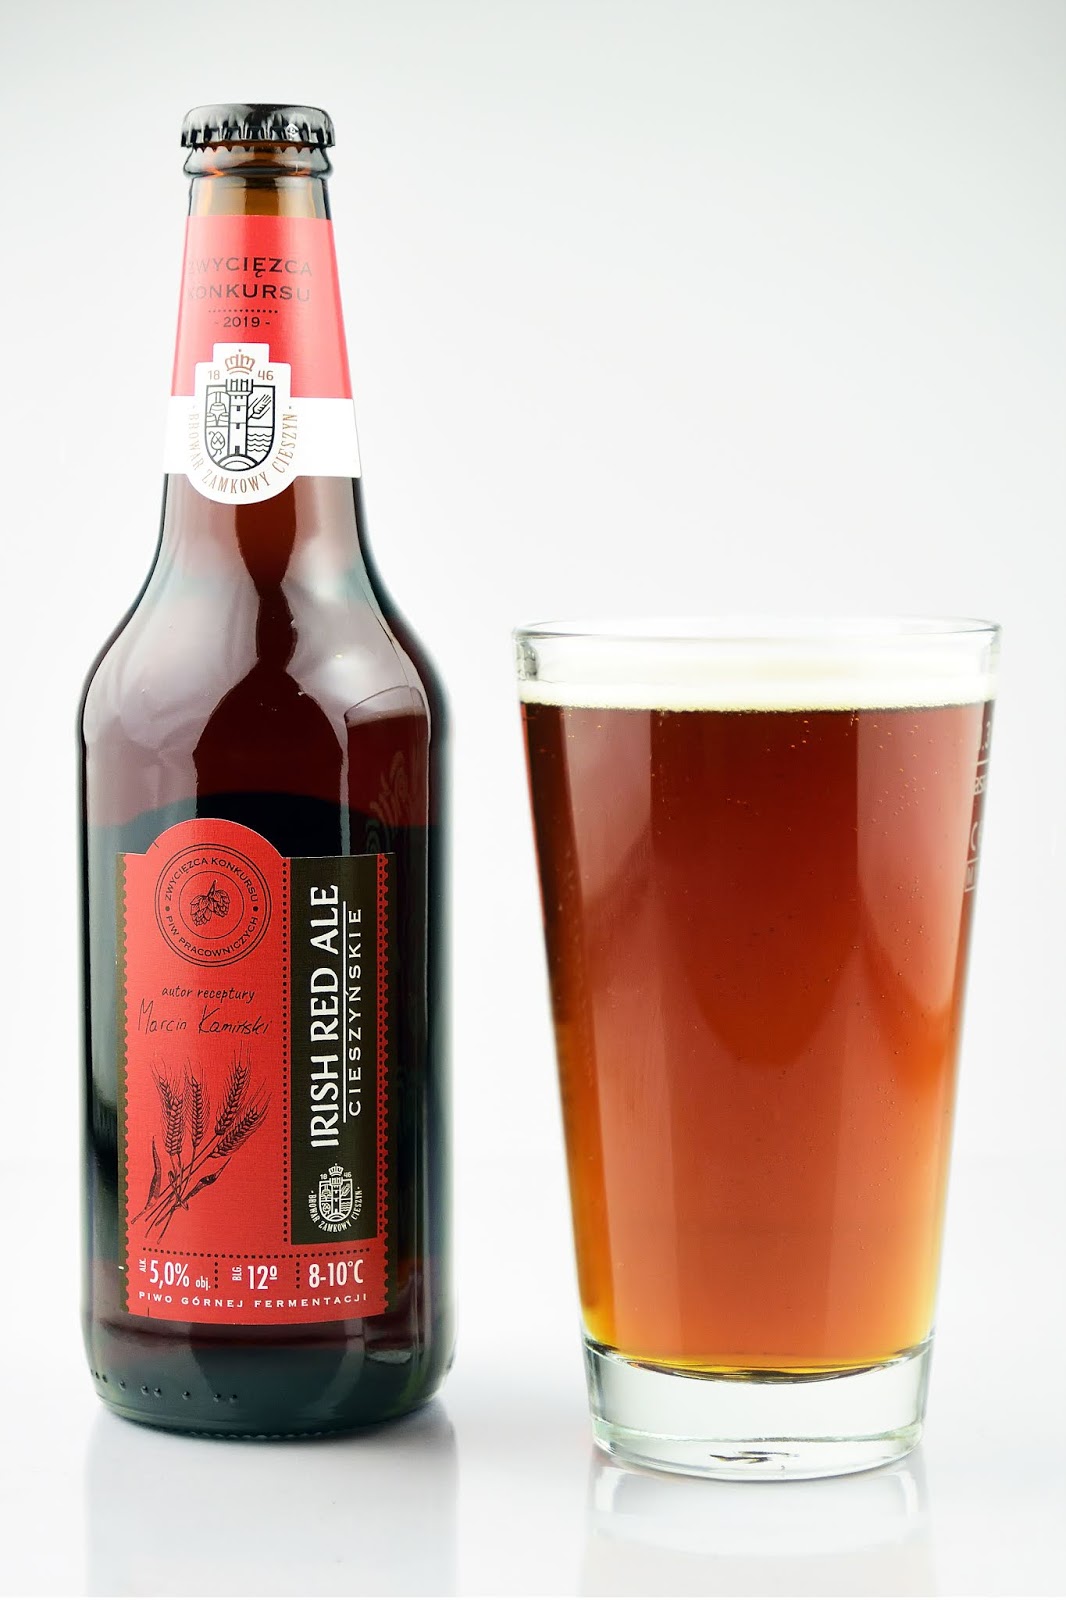 Red ale пиво. Пиво Irish Red ale Anderson. Sullivans пиво Red ale. Пиво с красной этикеткой. Irish red